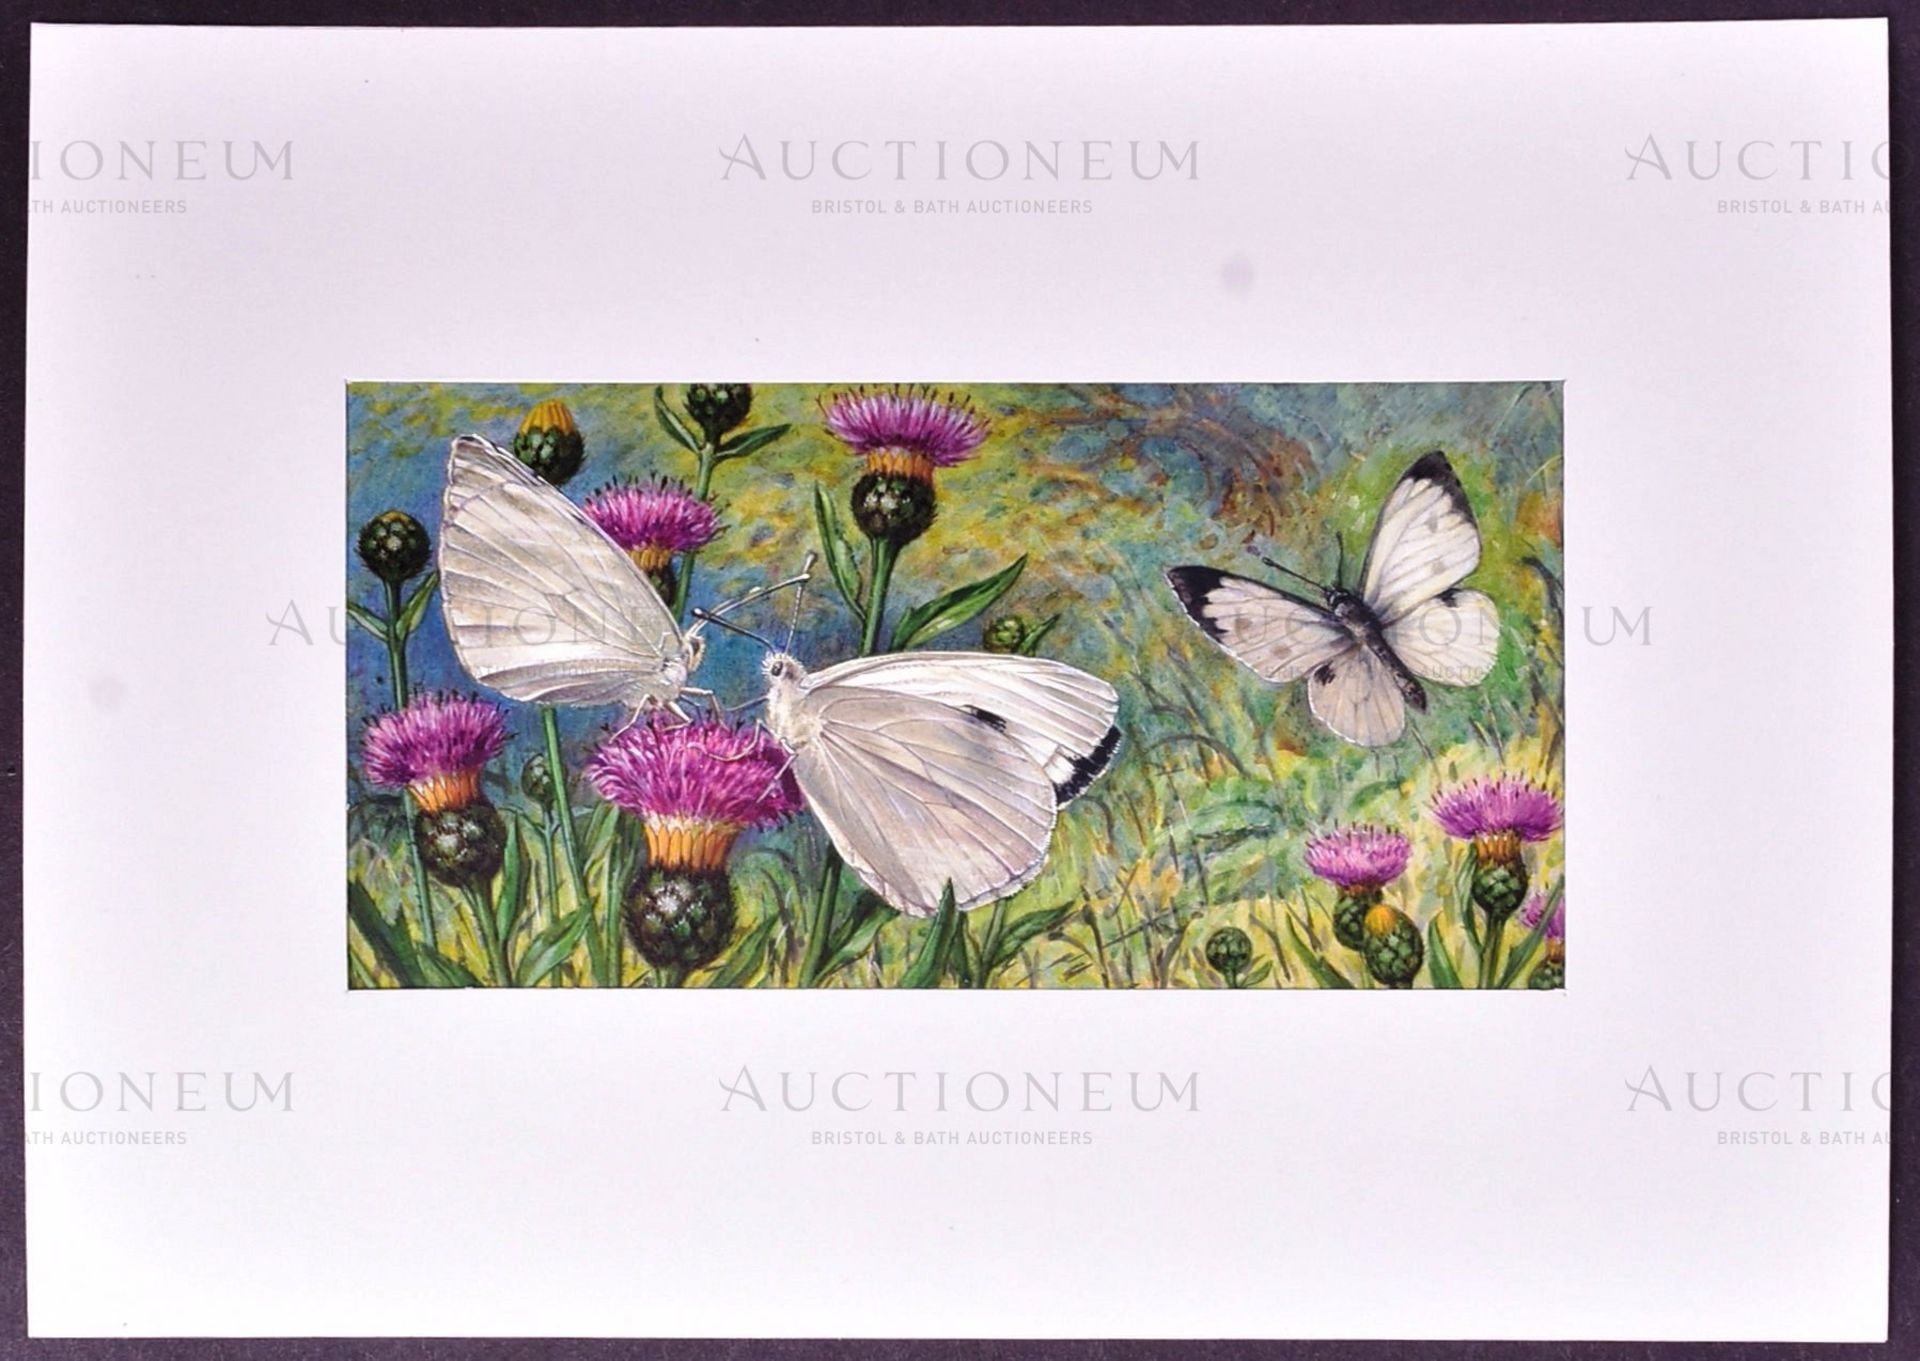 MARDON SON & HALL - CIGARETTE CARDS - ORIGINAL ARTWORK - Image 2 of 4